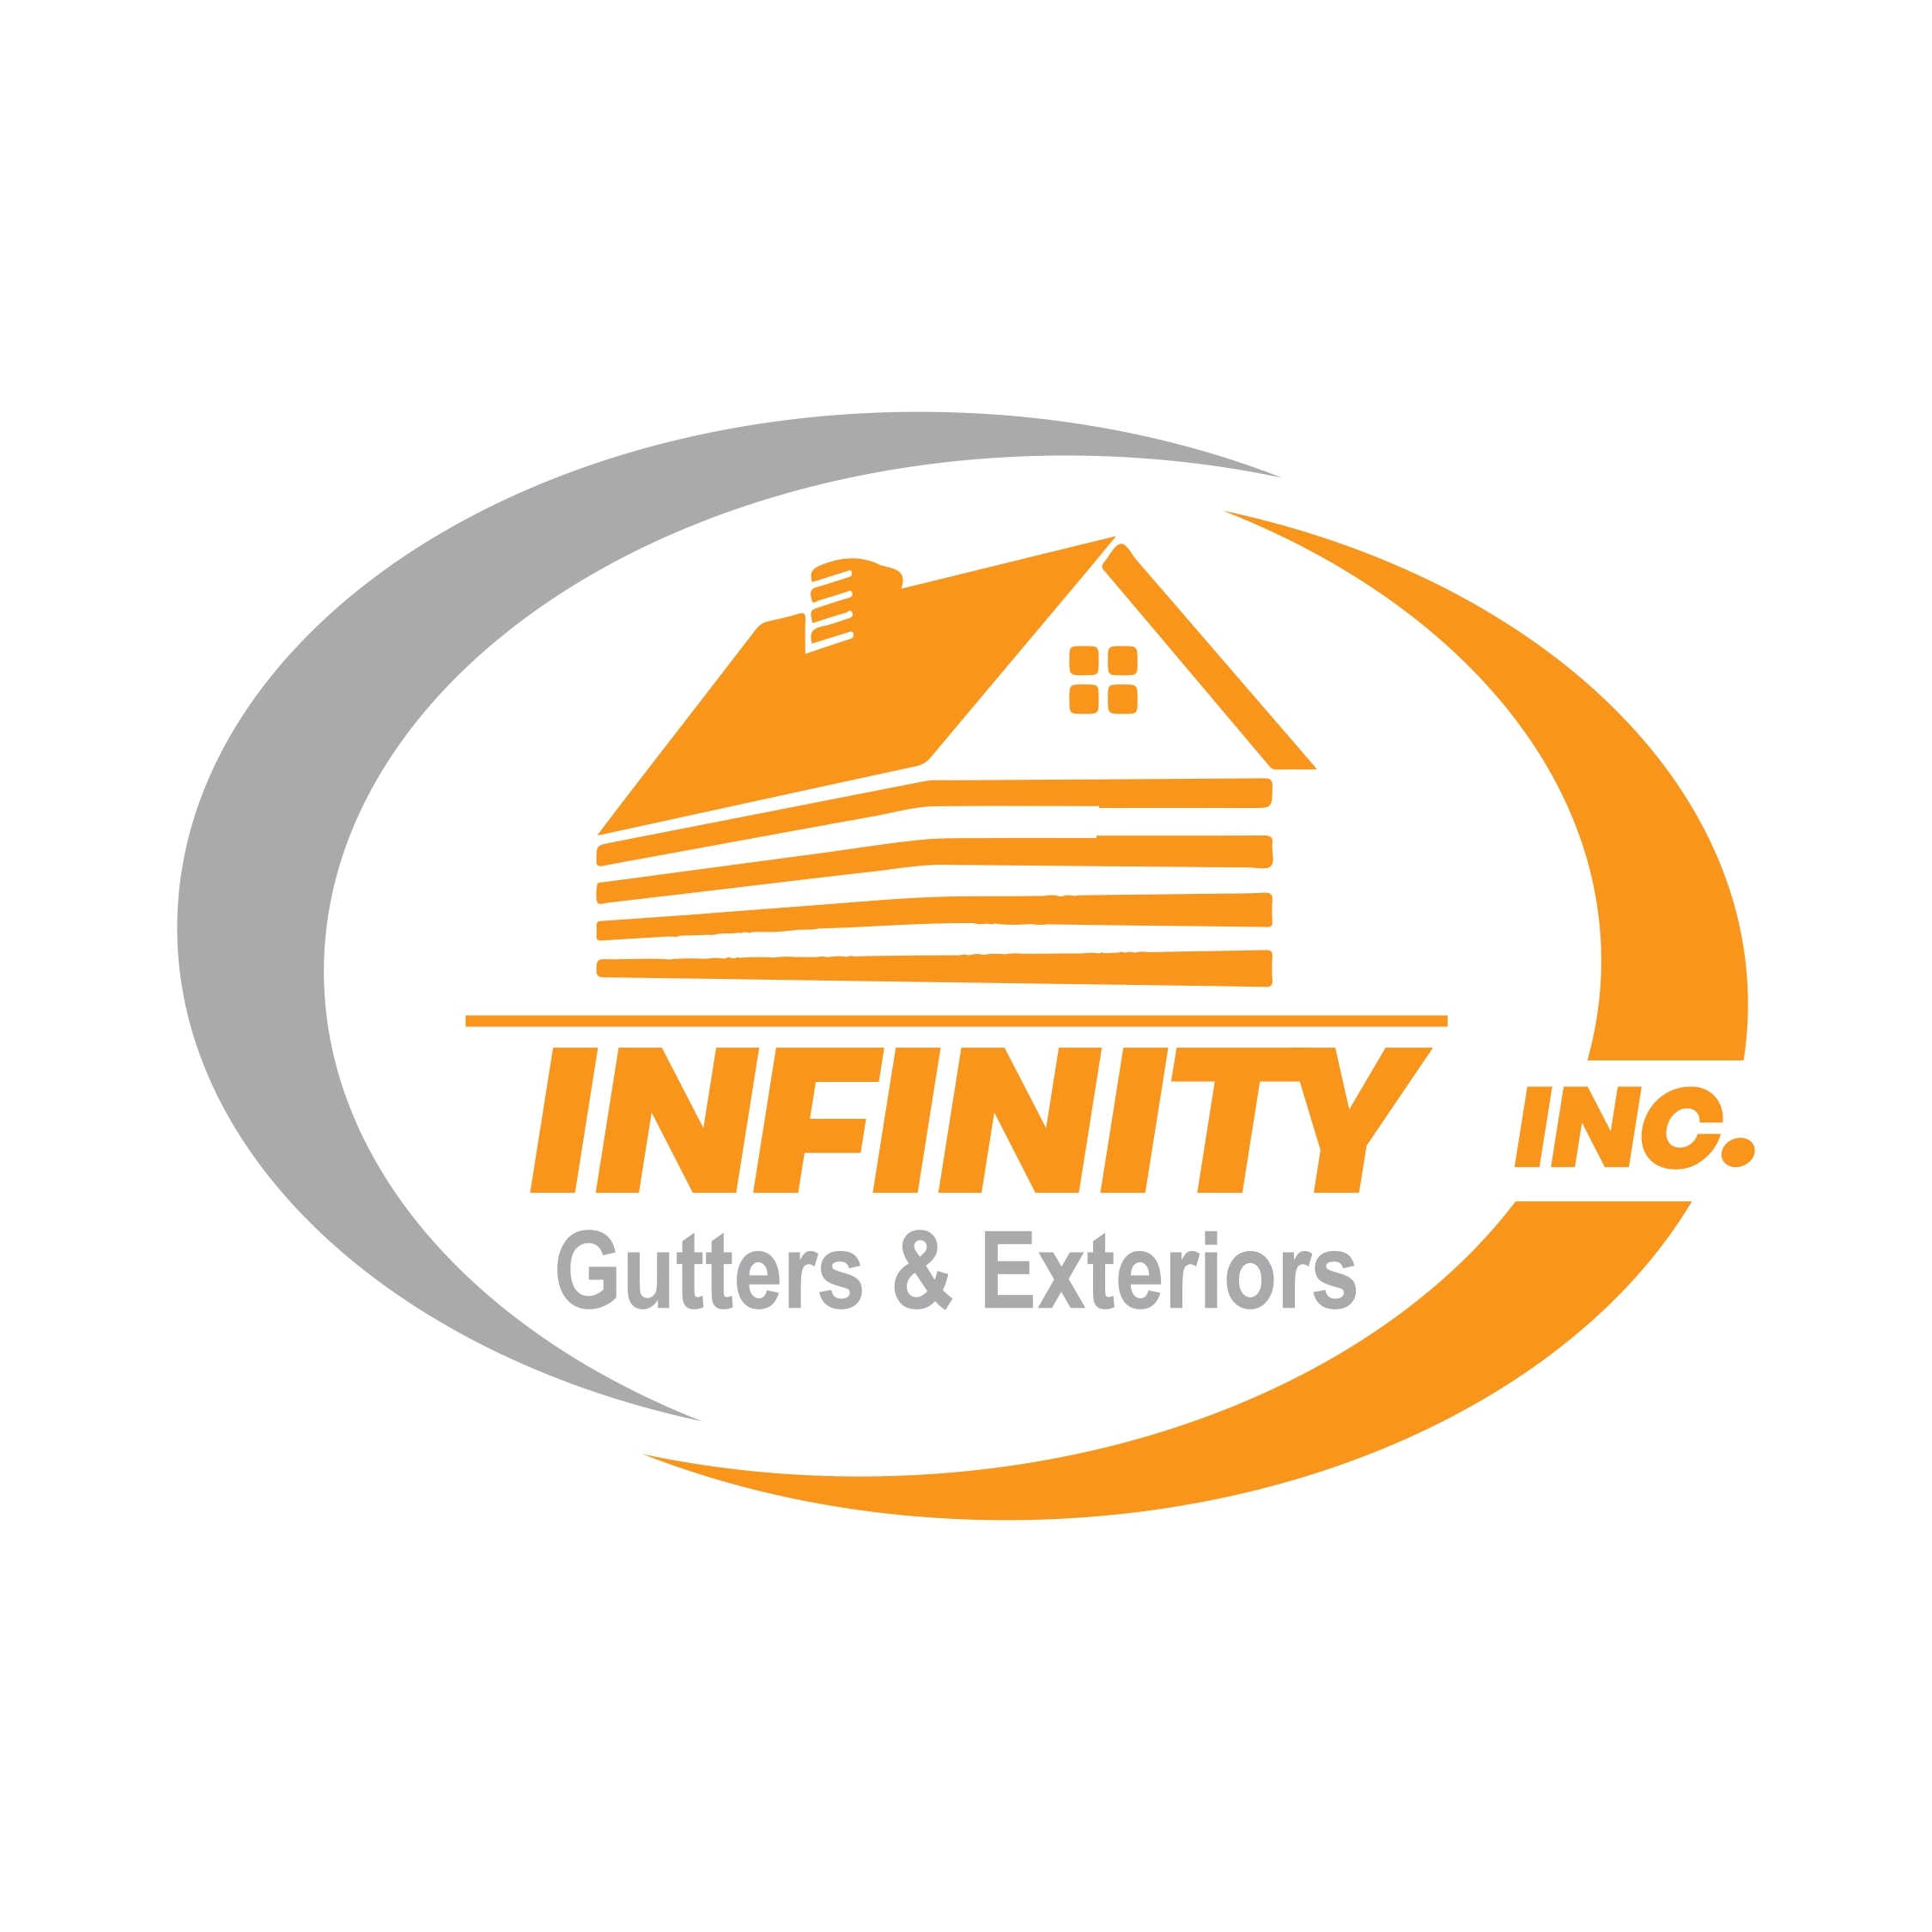 Infinity Gutters & Exteriors's logo